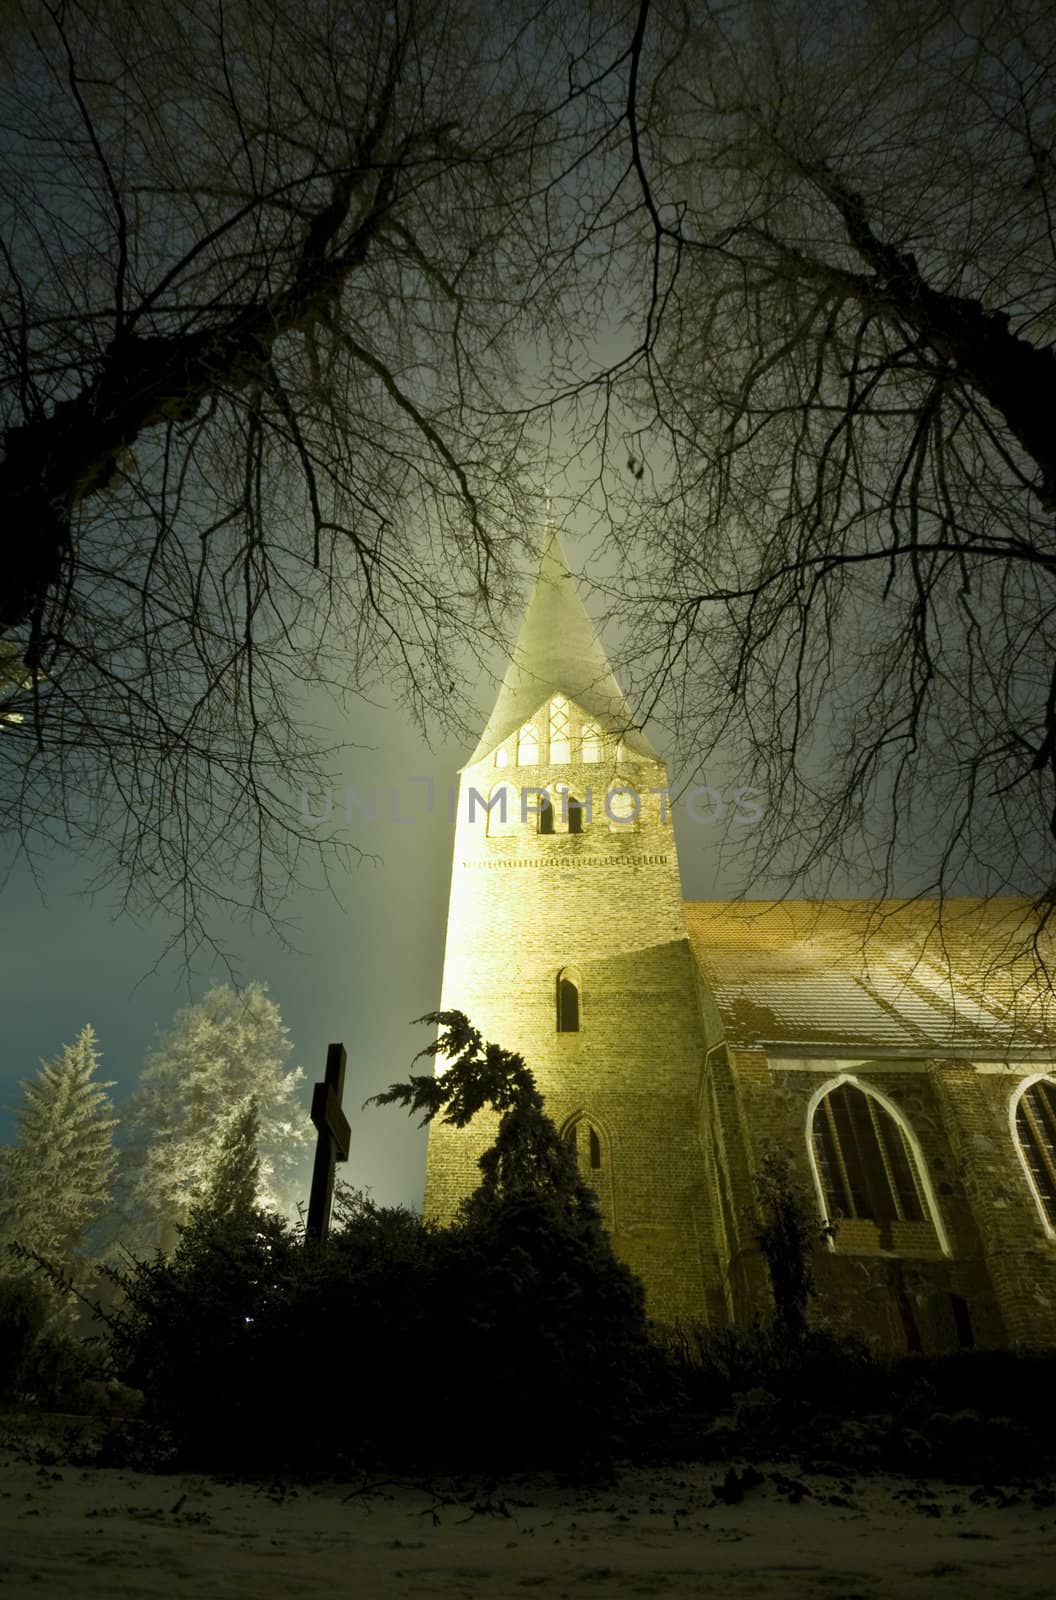 village church of Wusterhusen, germany at night